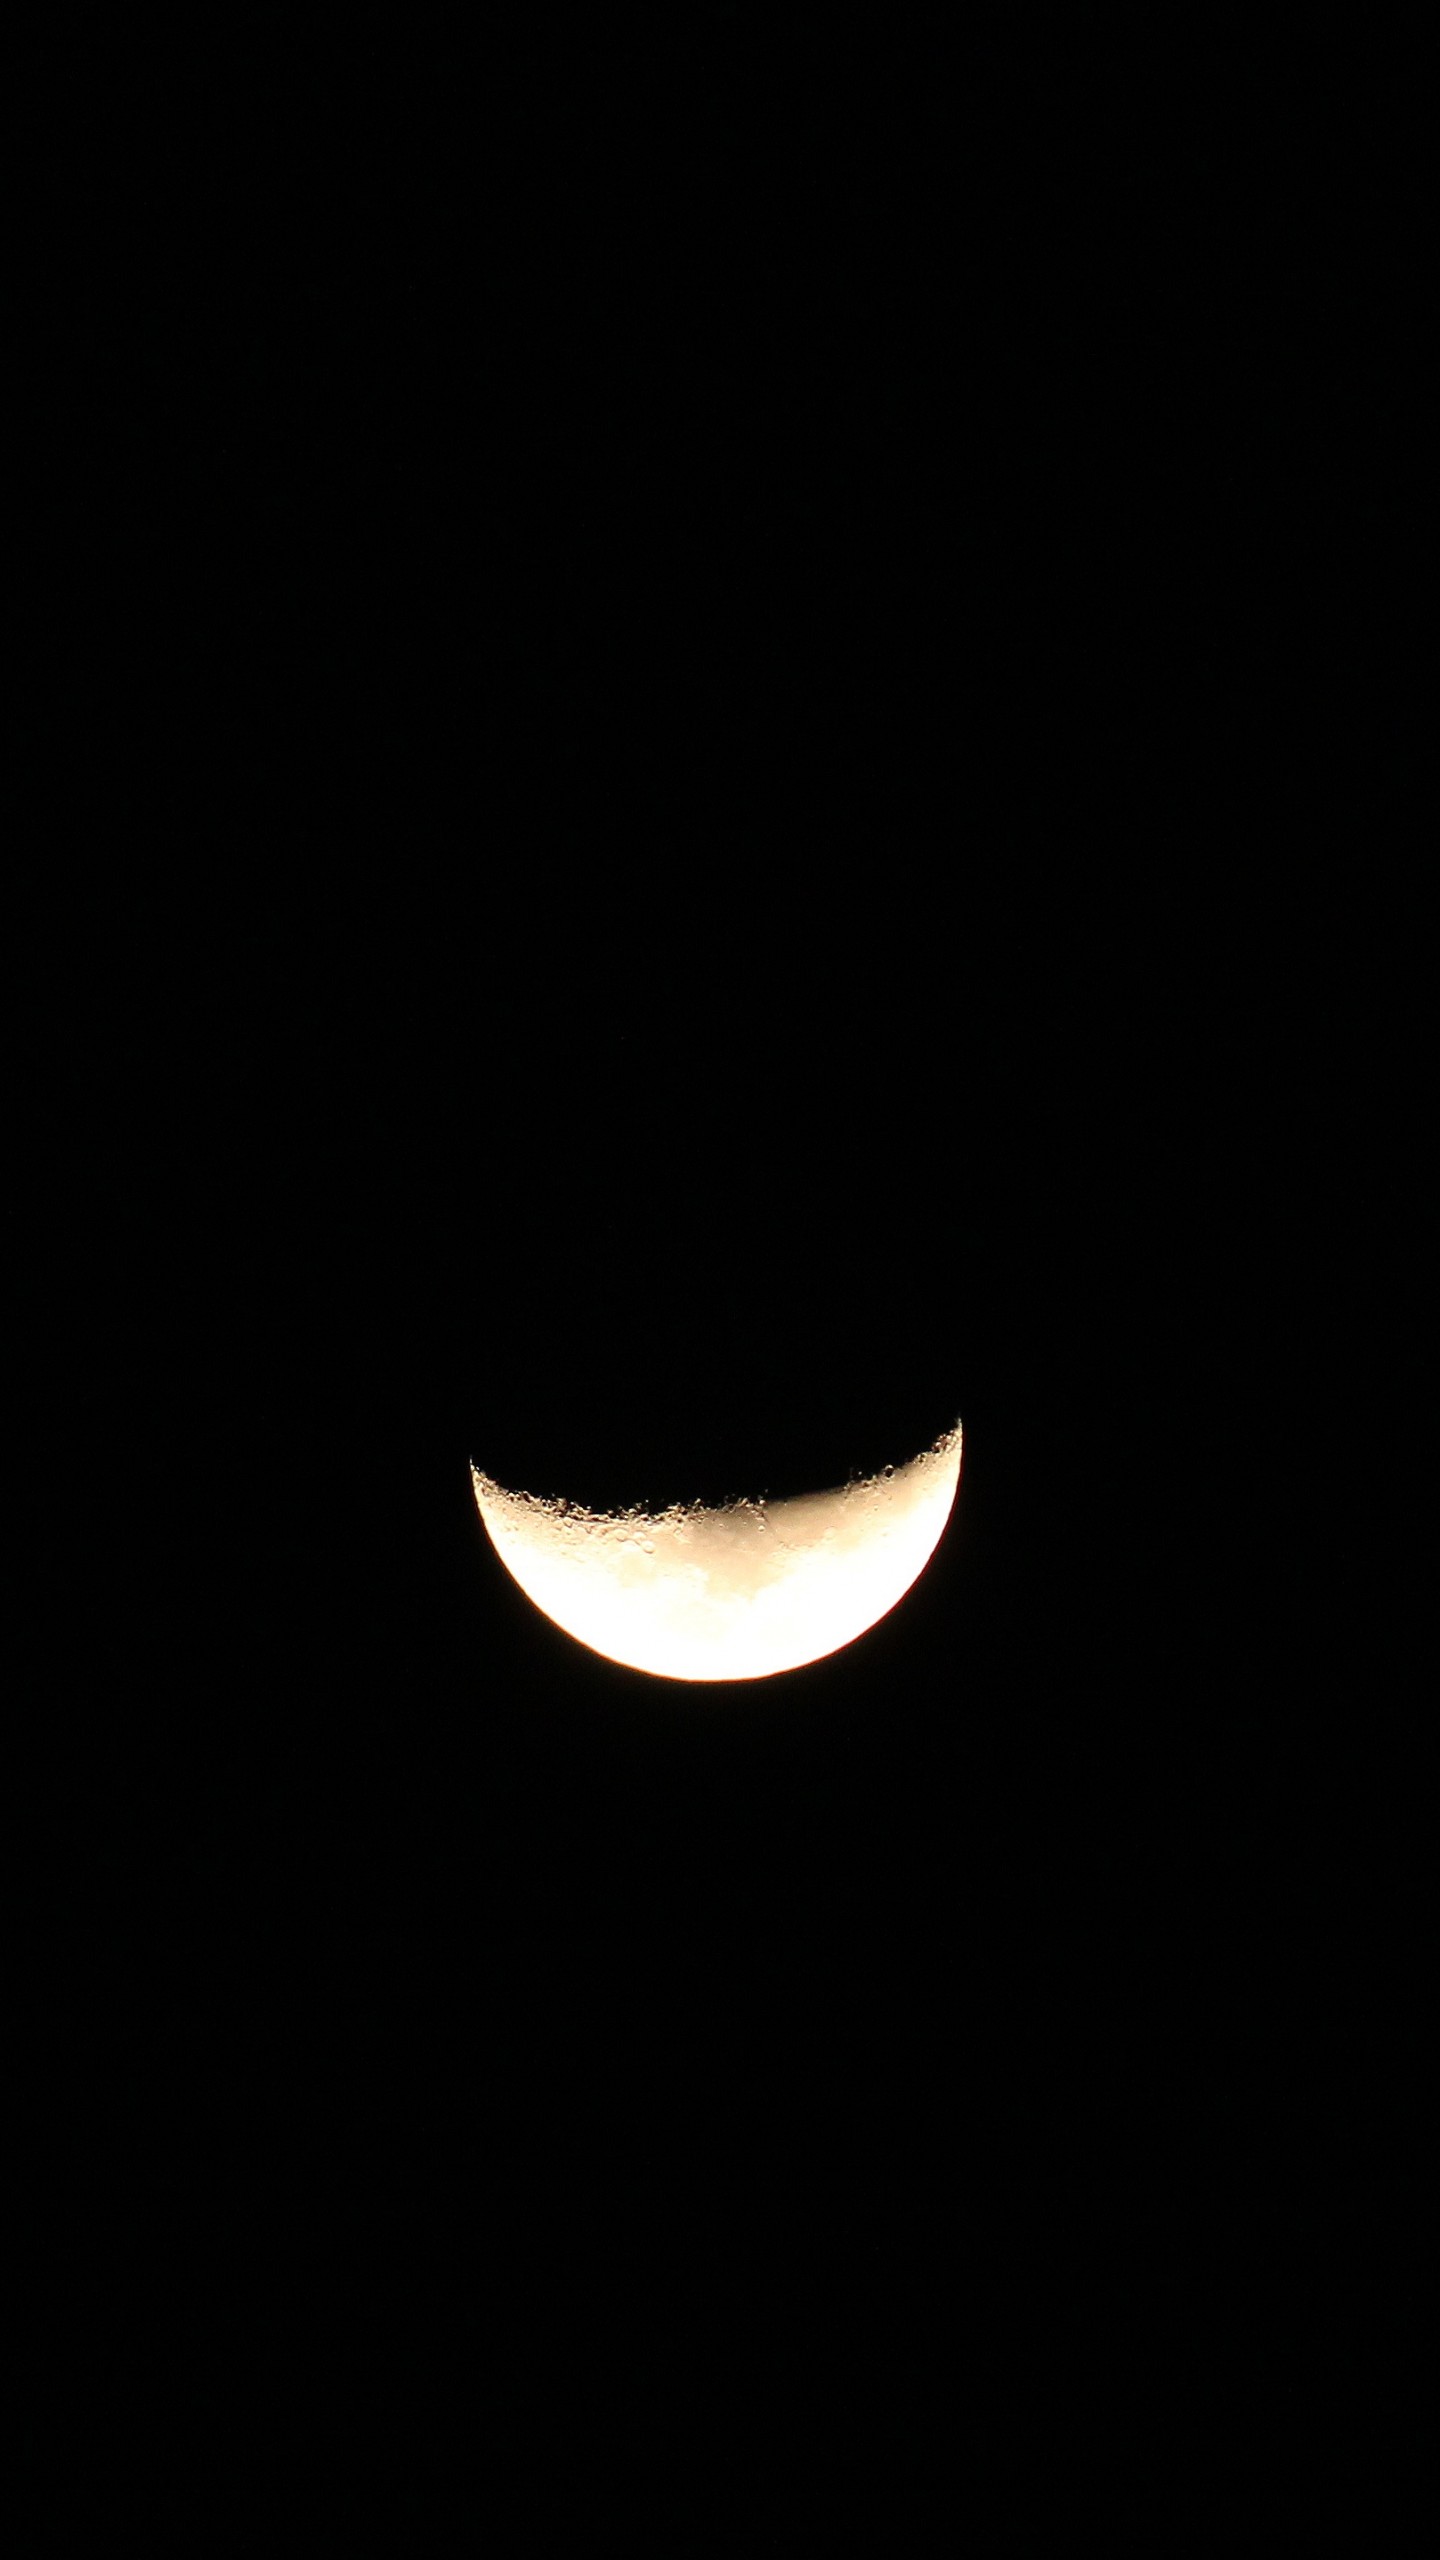 Crescent Moon on Black Background